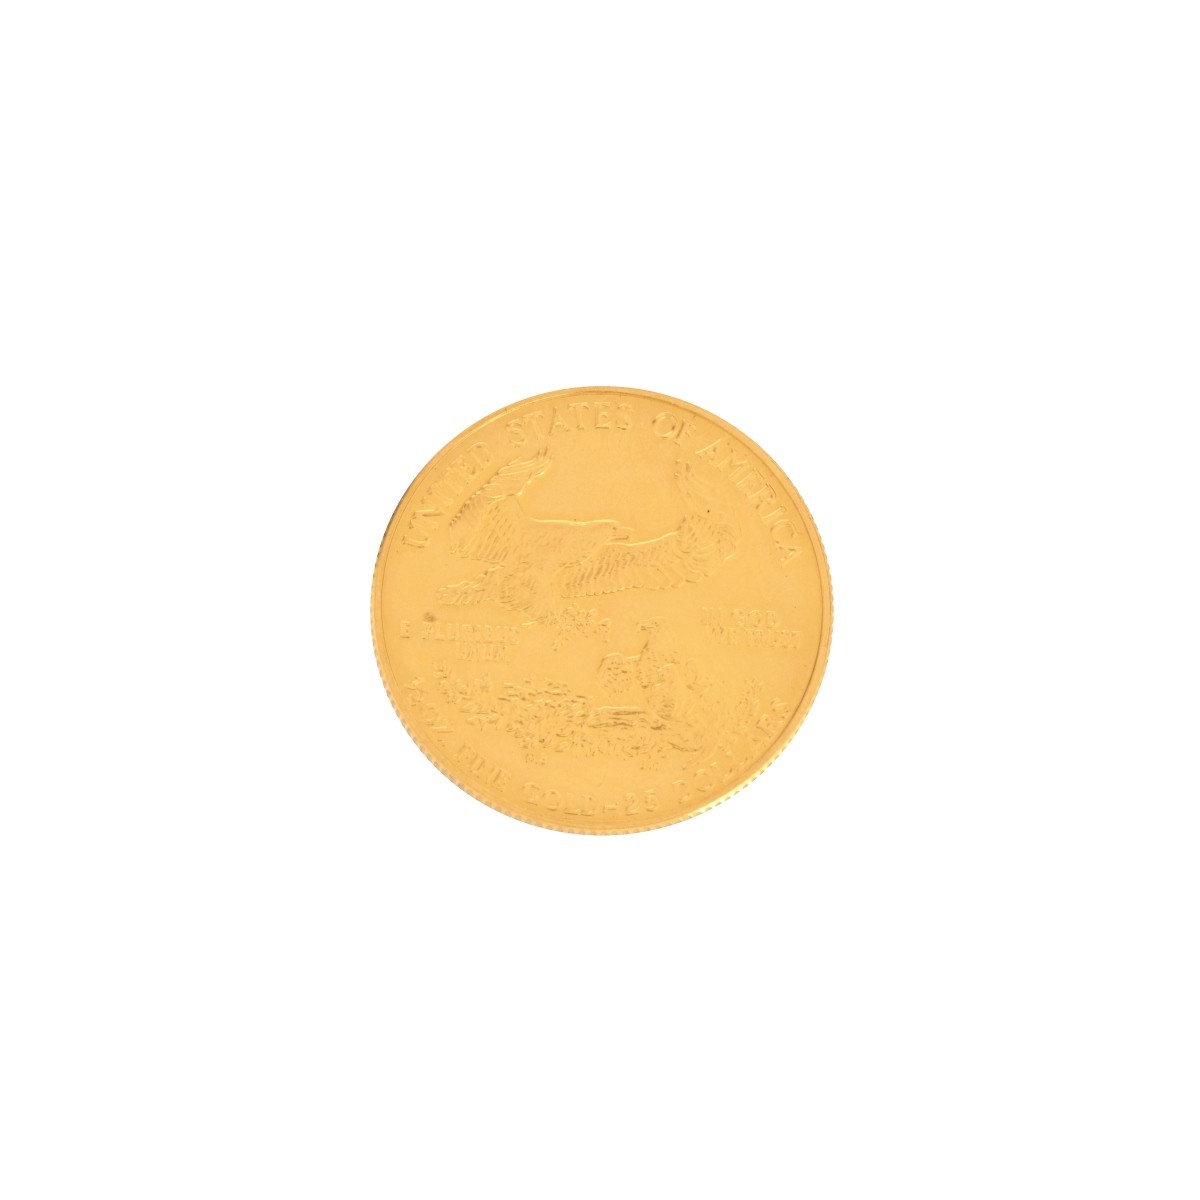 1986 US $25 Eagle Gold Coin